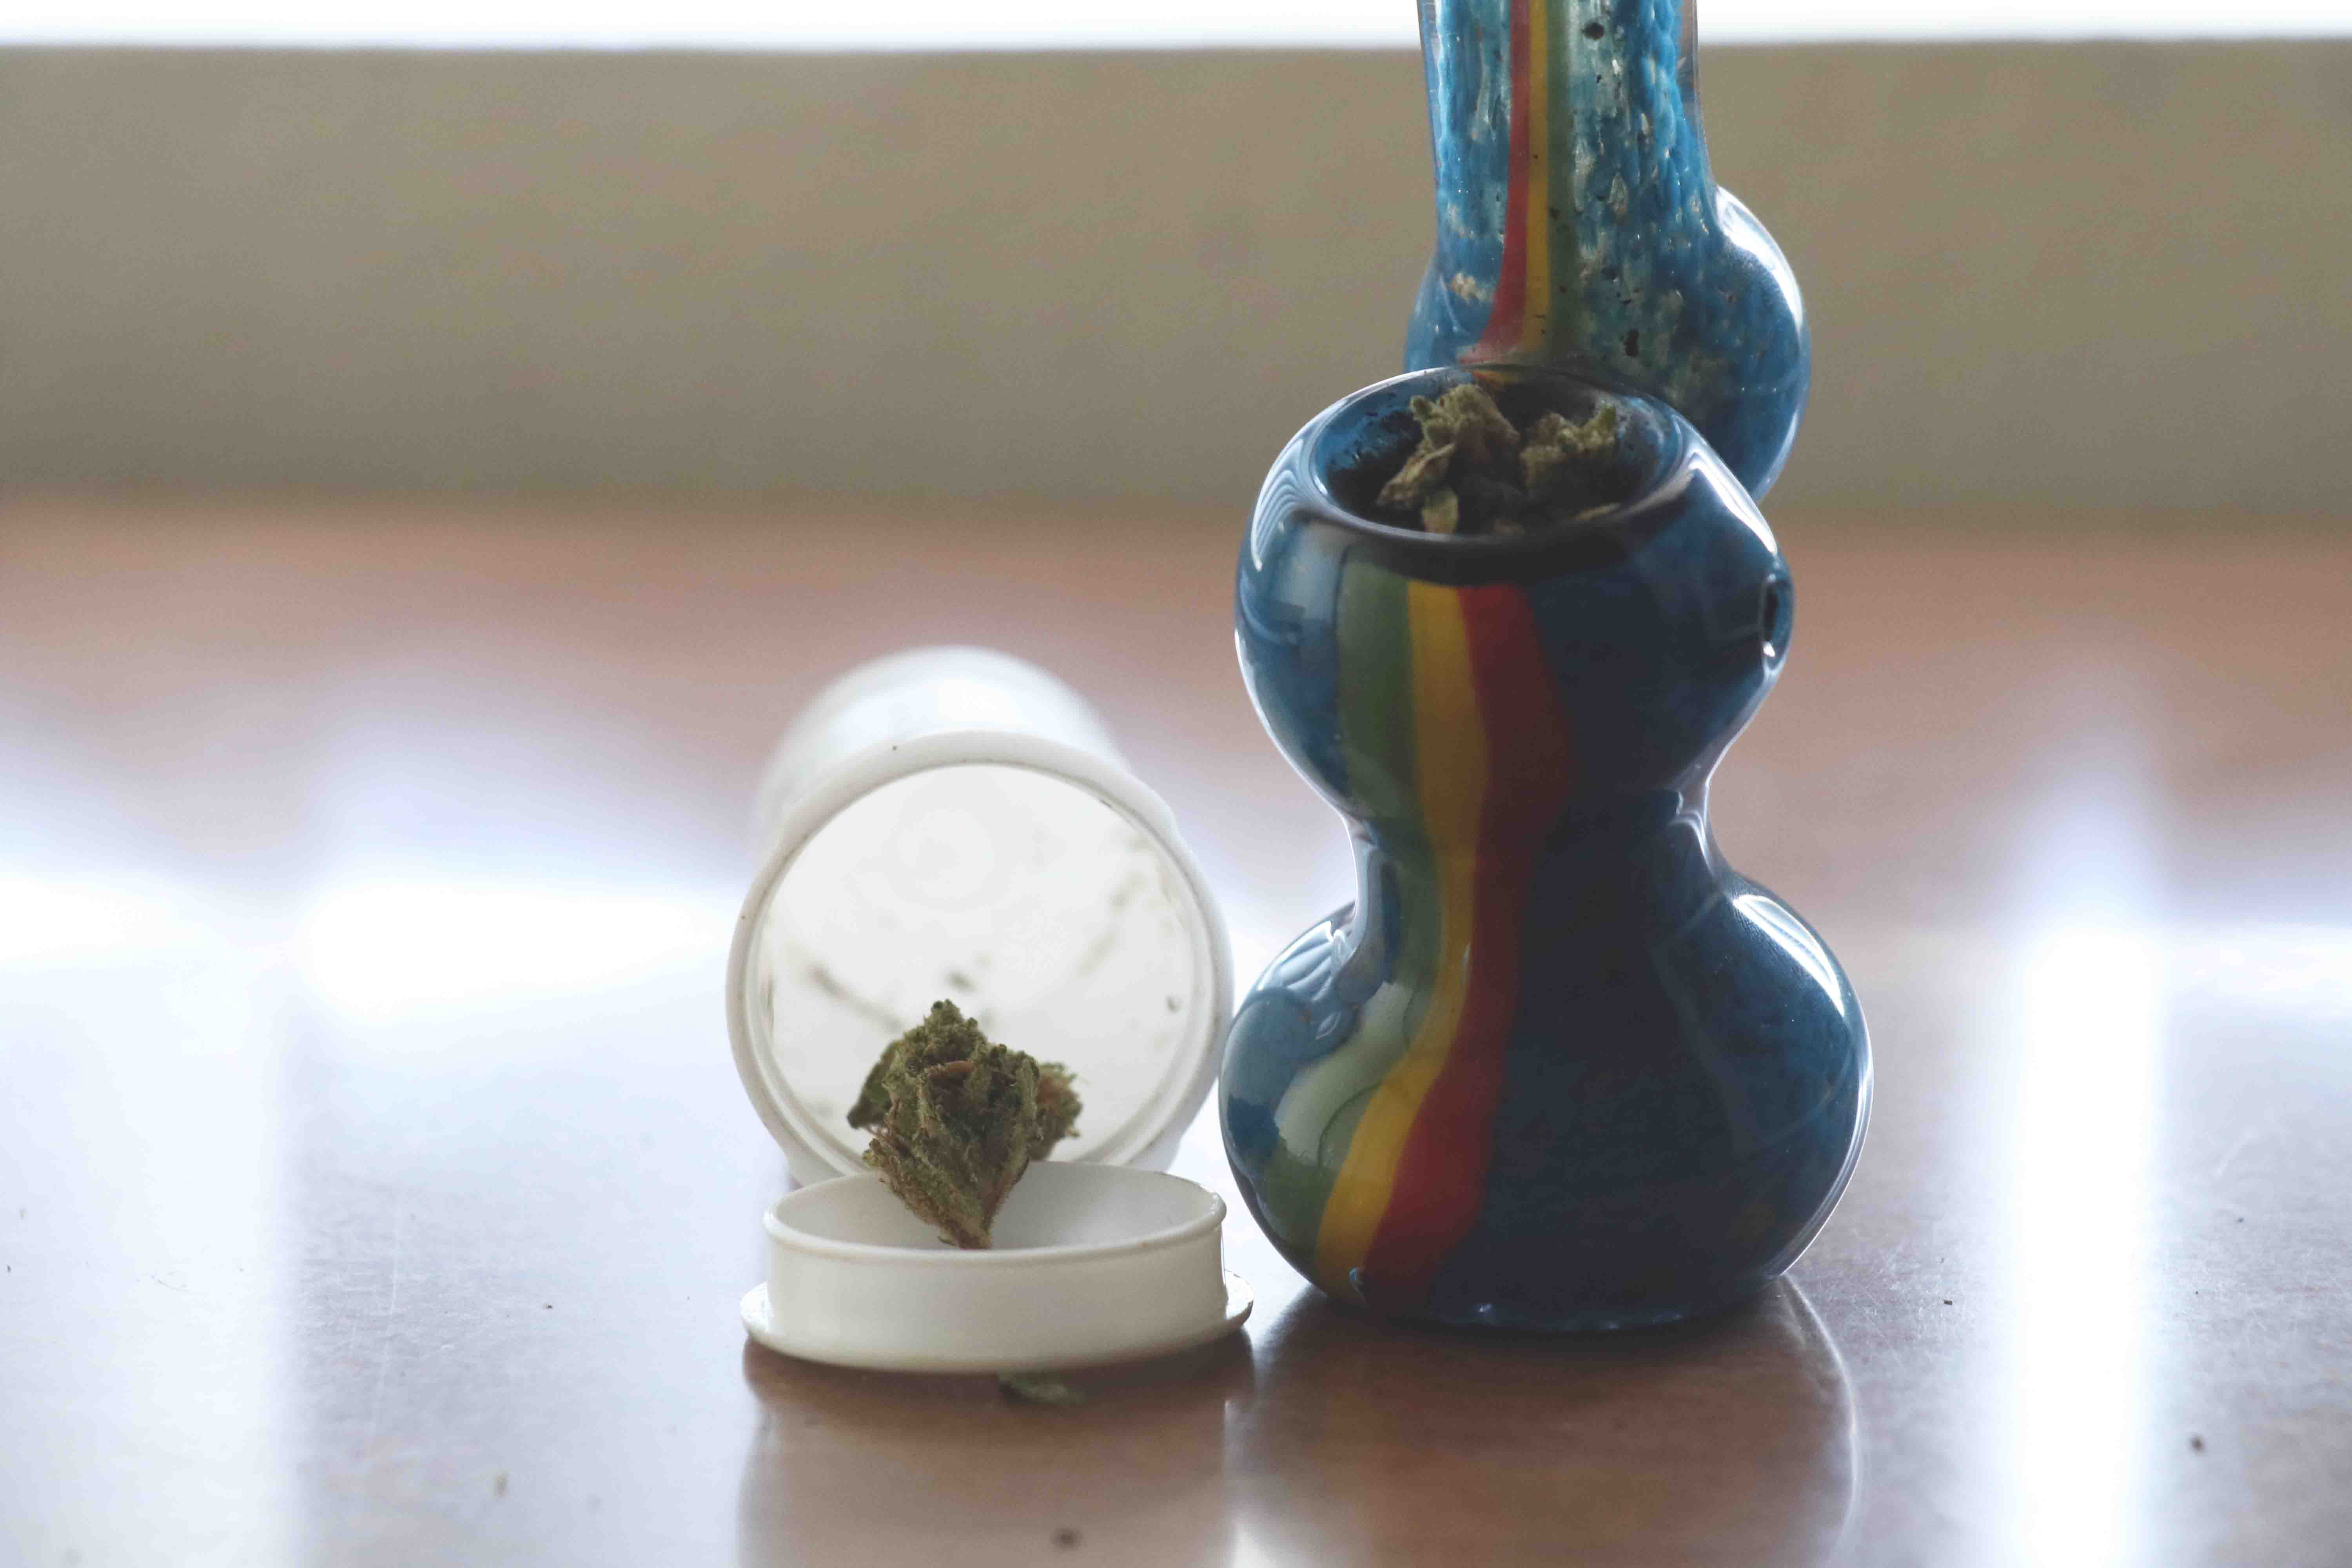 Colton continues to prep for potential Marijuana legalization